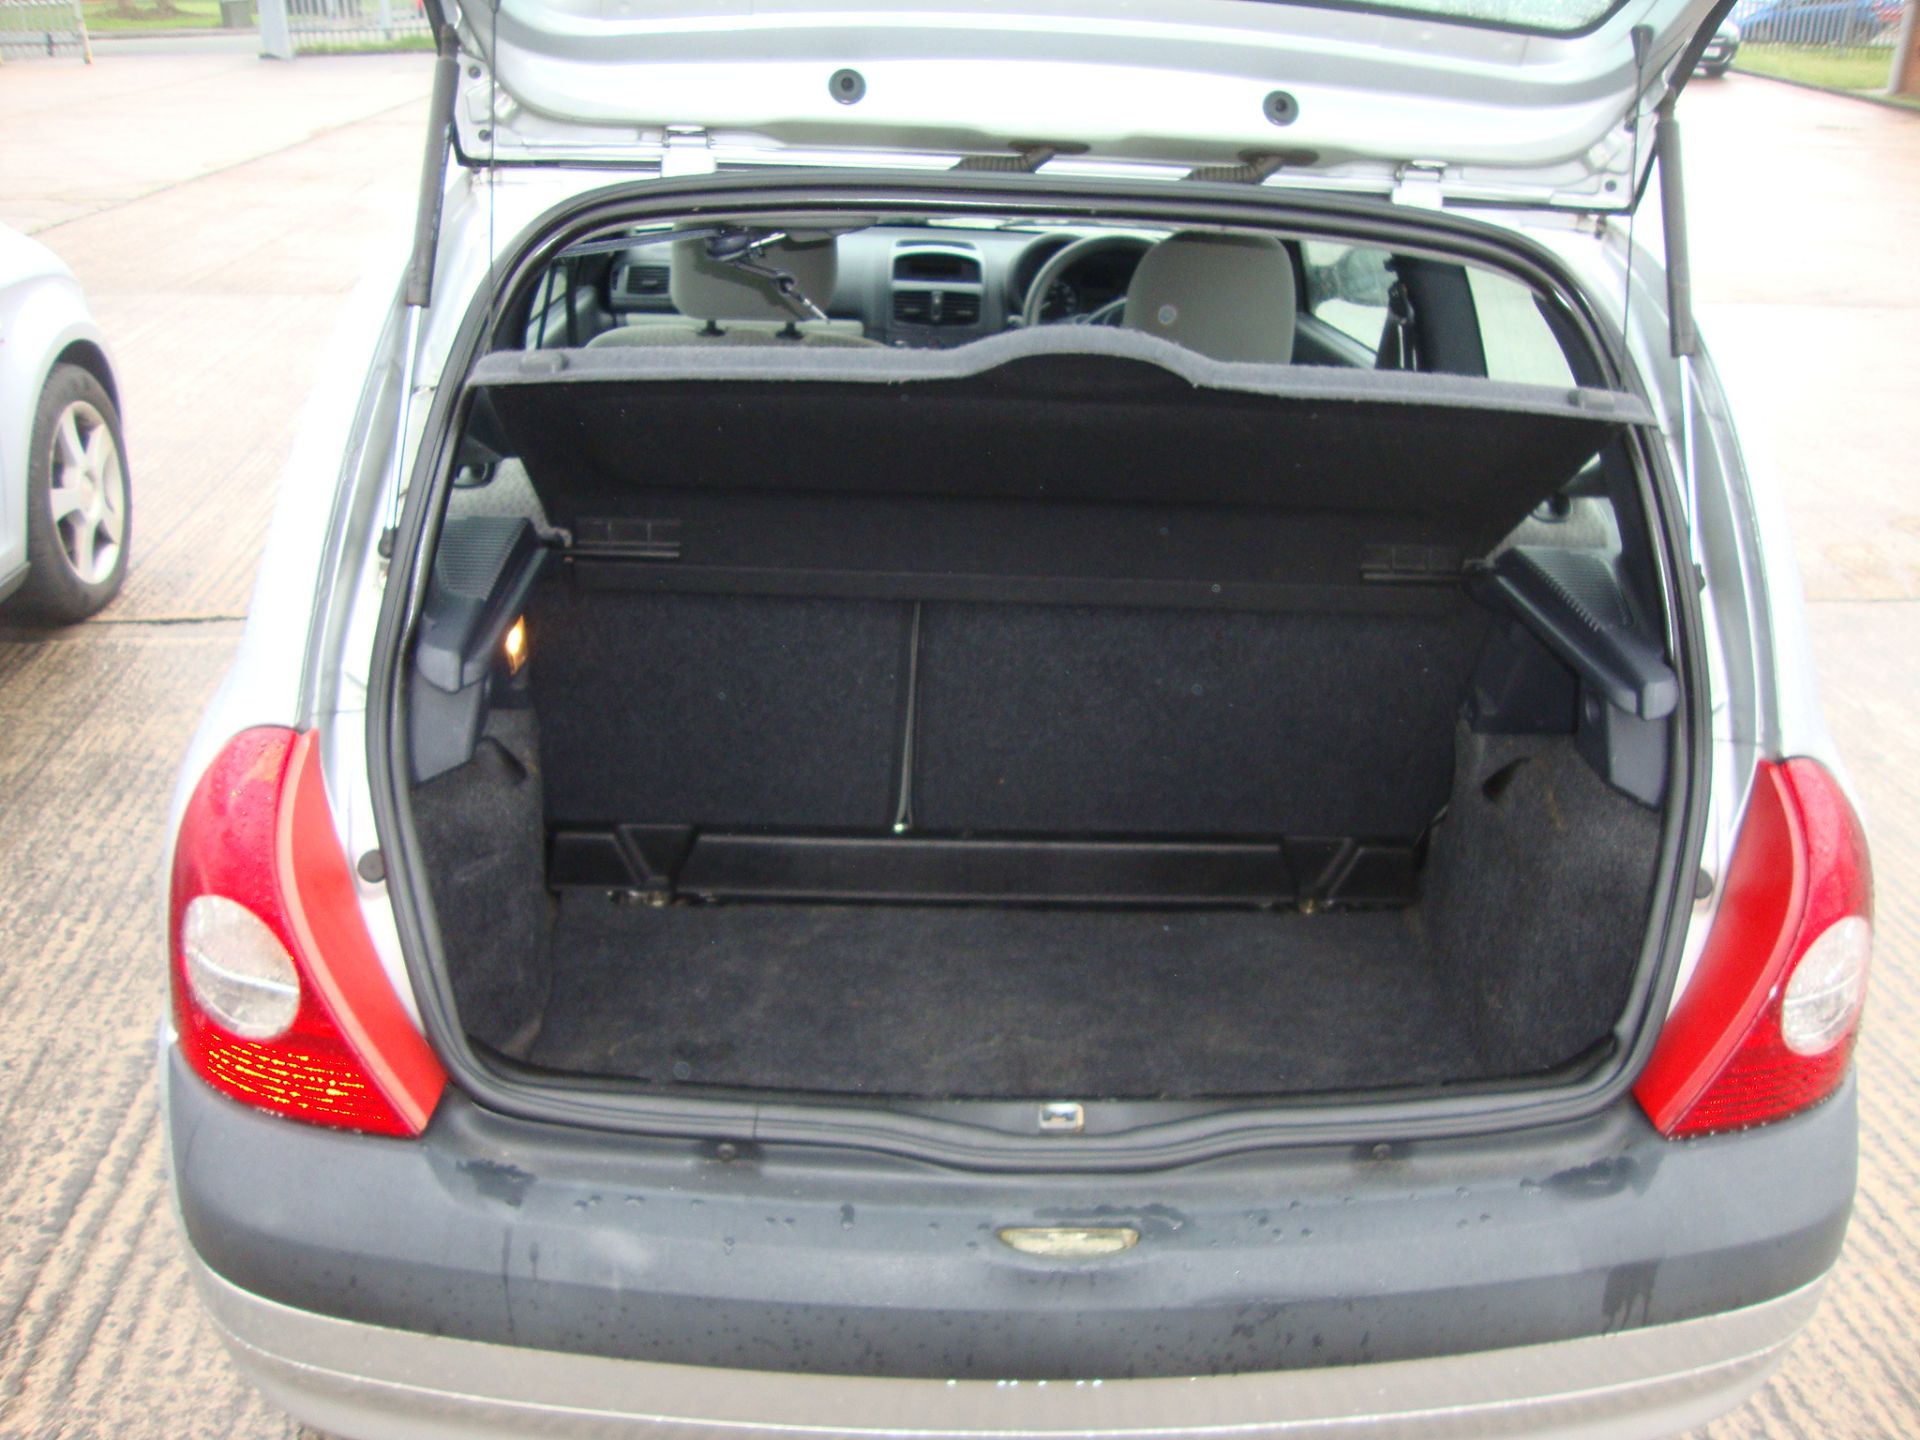 DG06 VYR Renault Clio Campus 3-door hatchback - Image 11 of 11